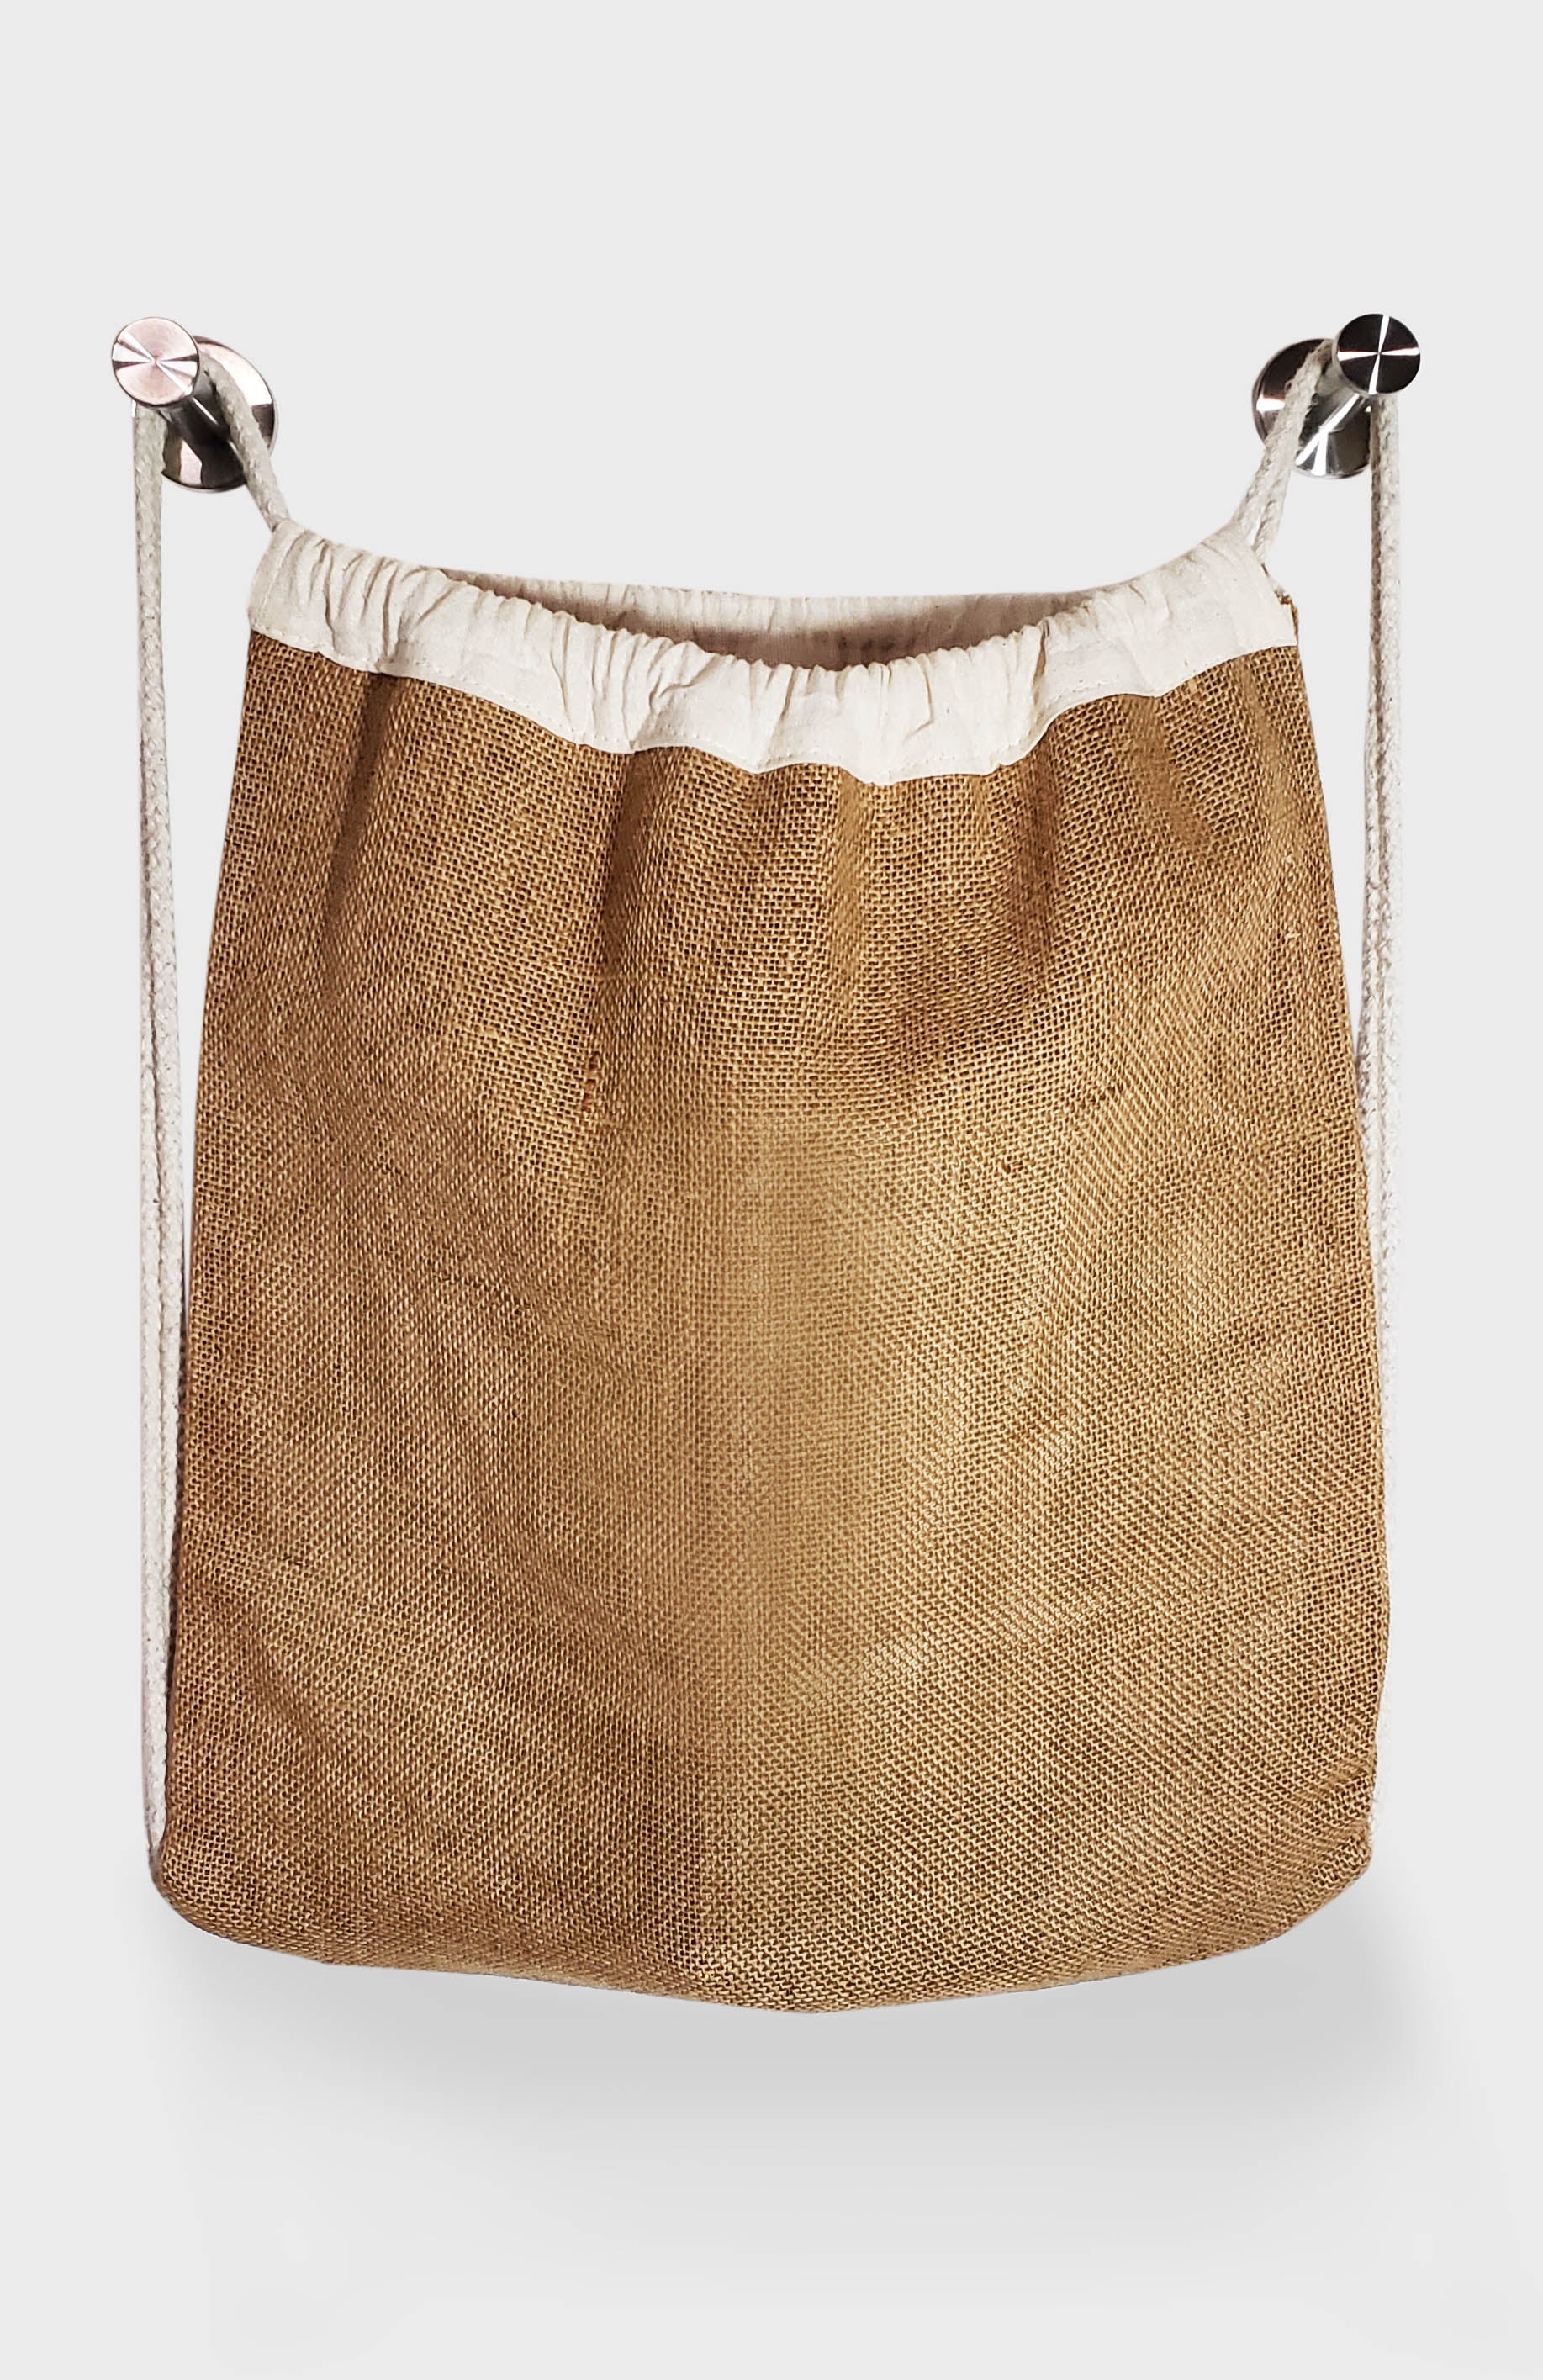 Jute Drawstring Bags, Burlap drawstring bags wholesale, bulk jute bags